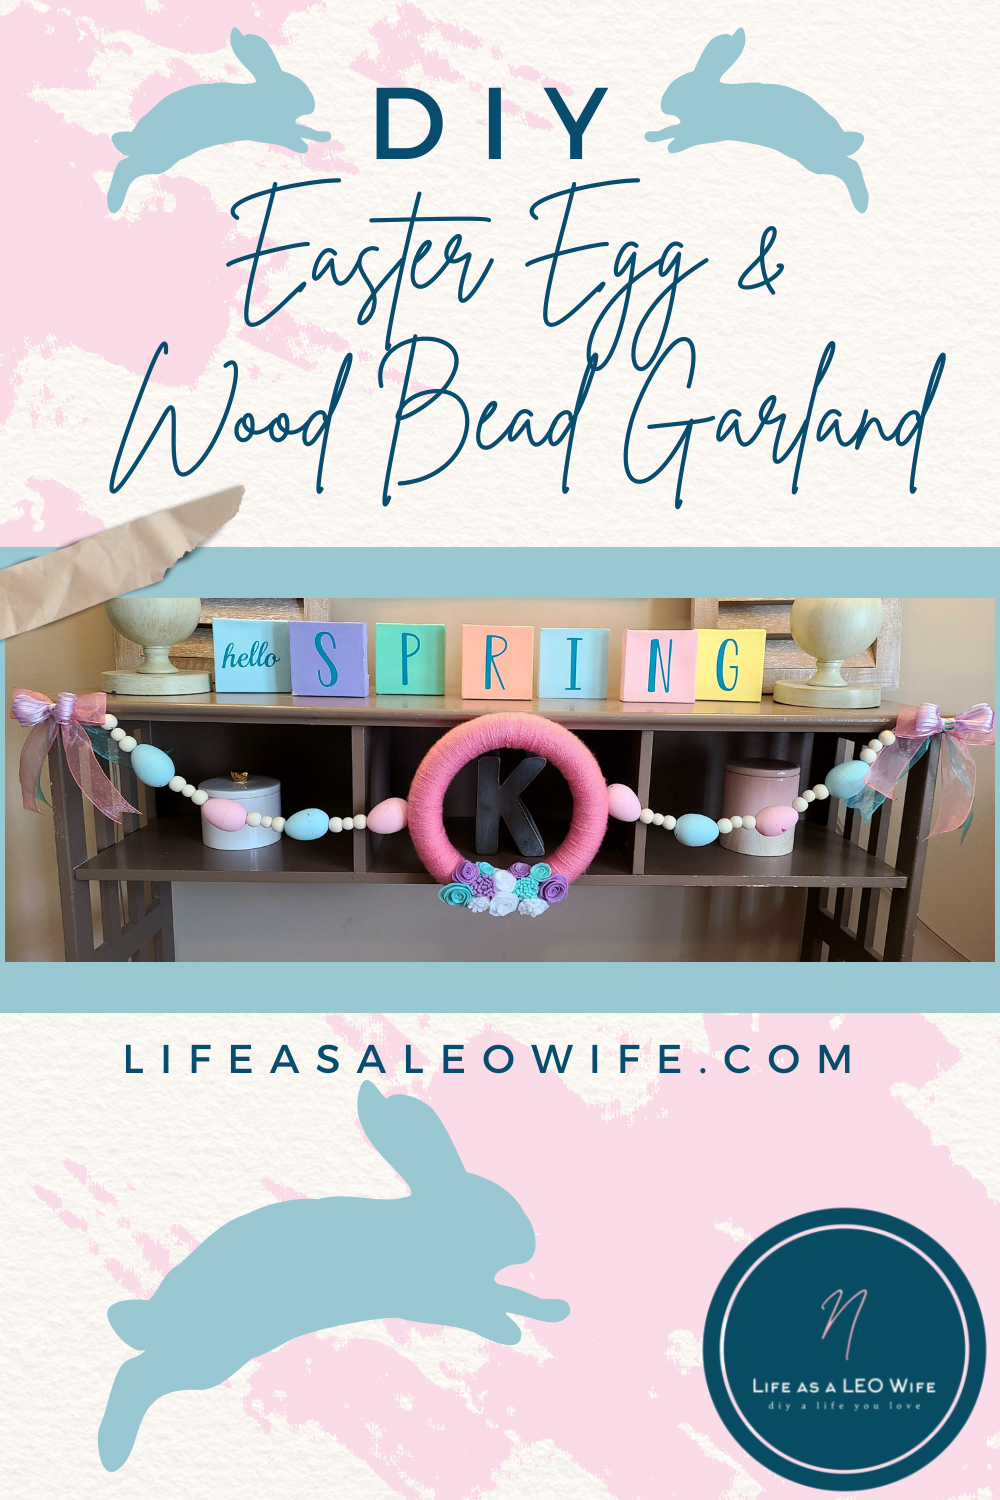 Easter egg & wood bead garland Pinterest image